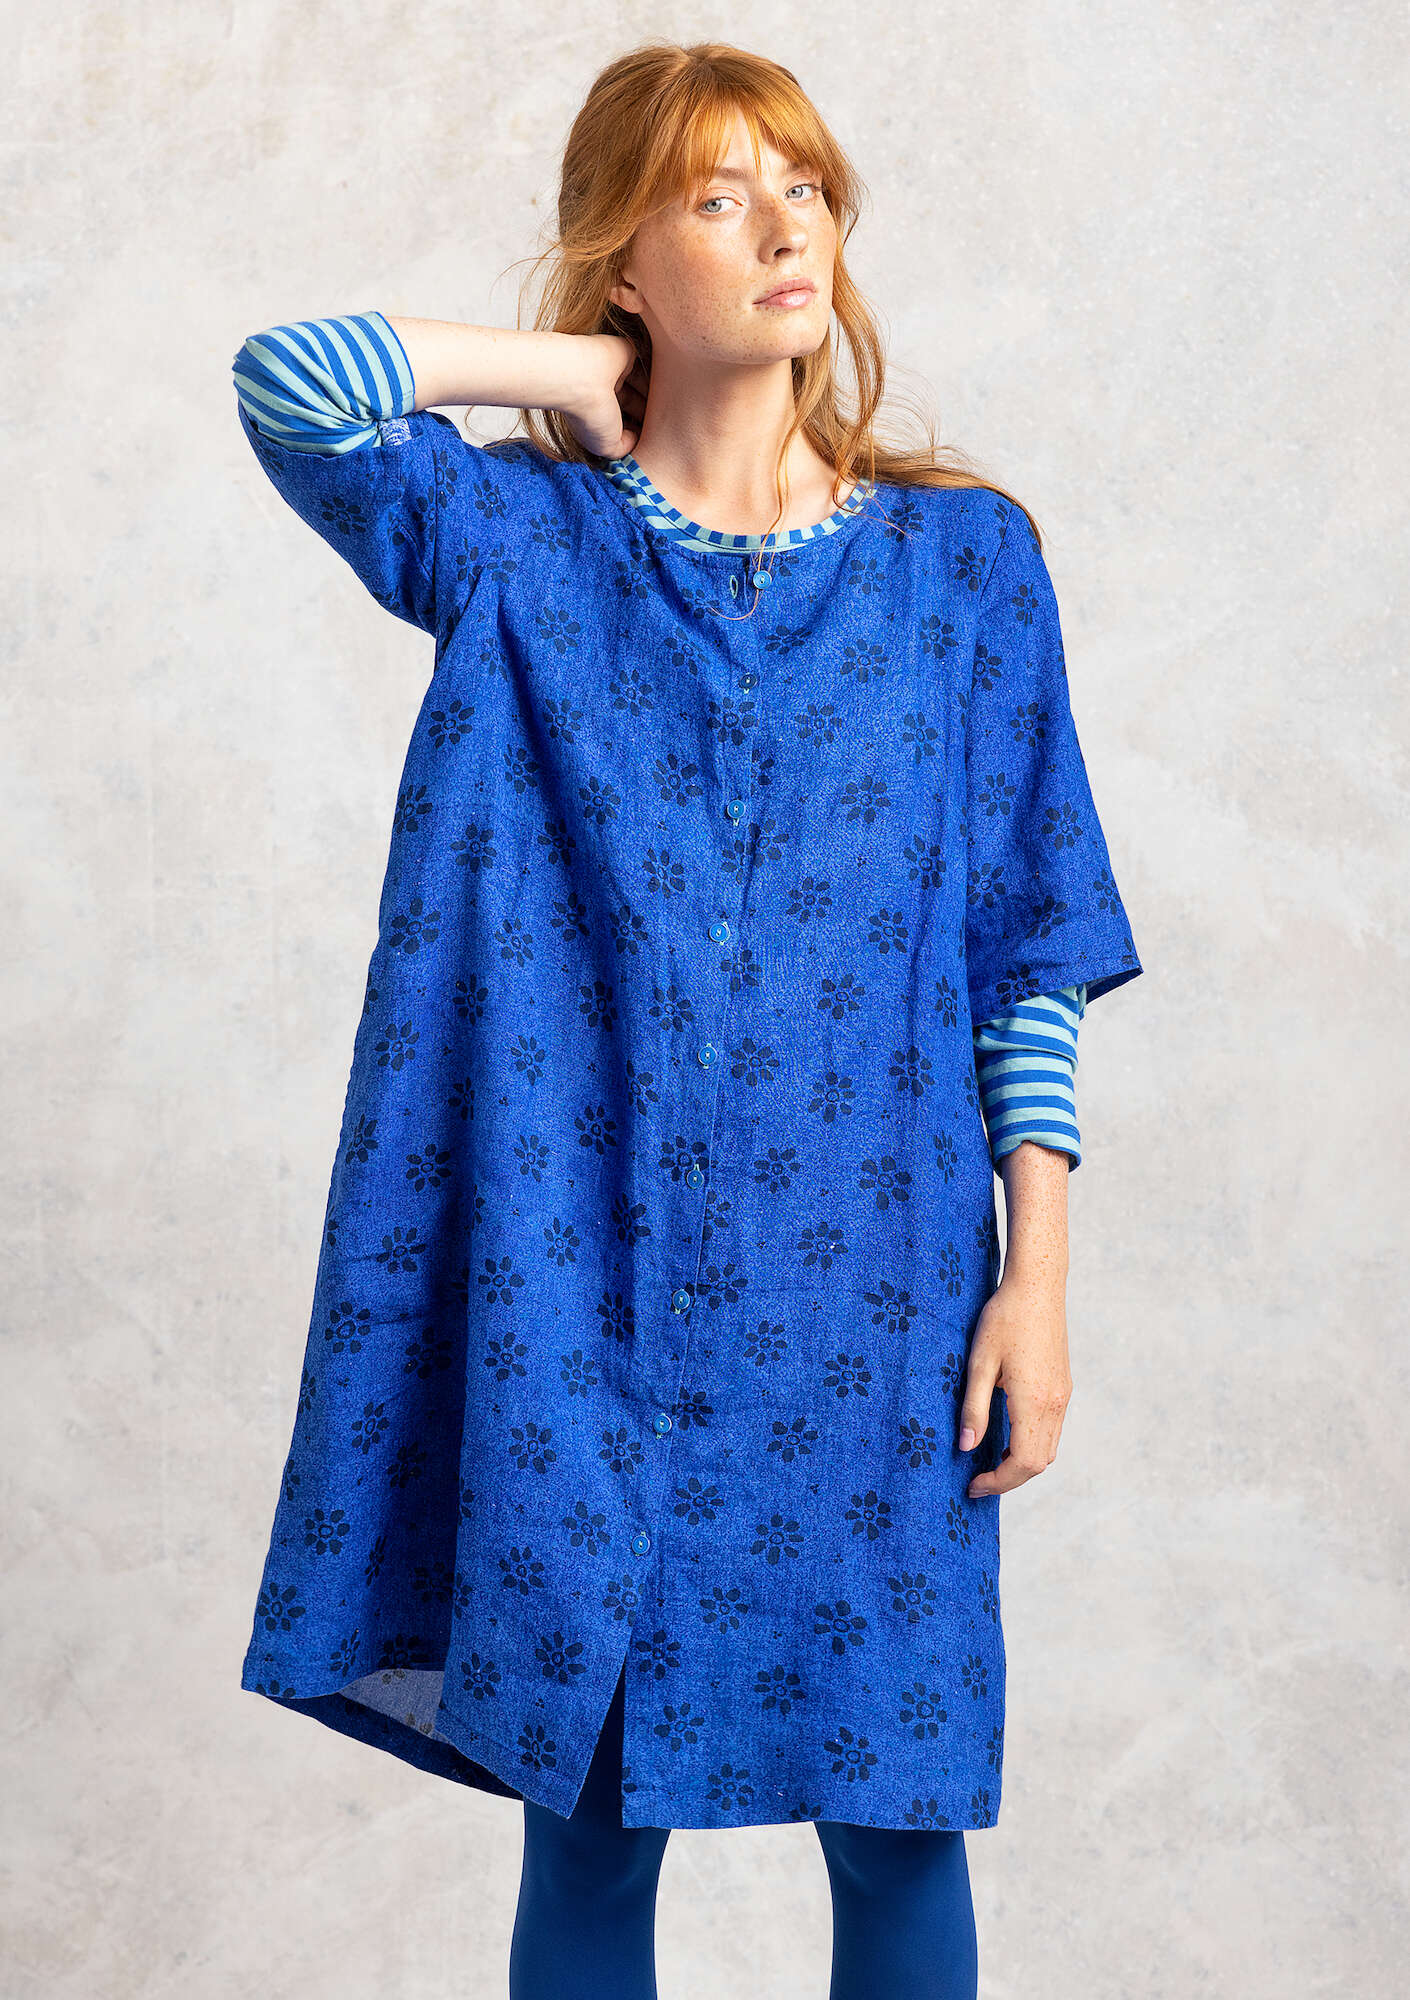 Robe tissée  Ester  en lin bleu saphir/motif